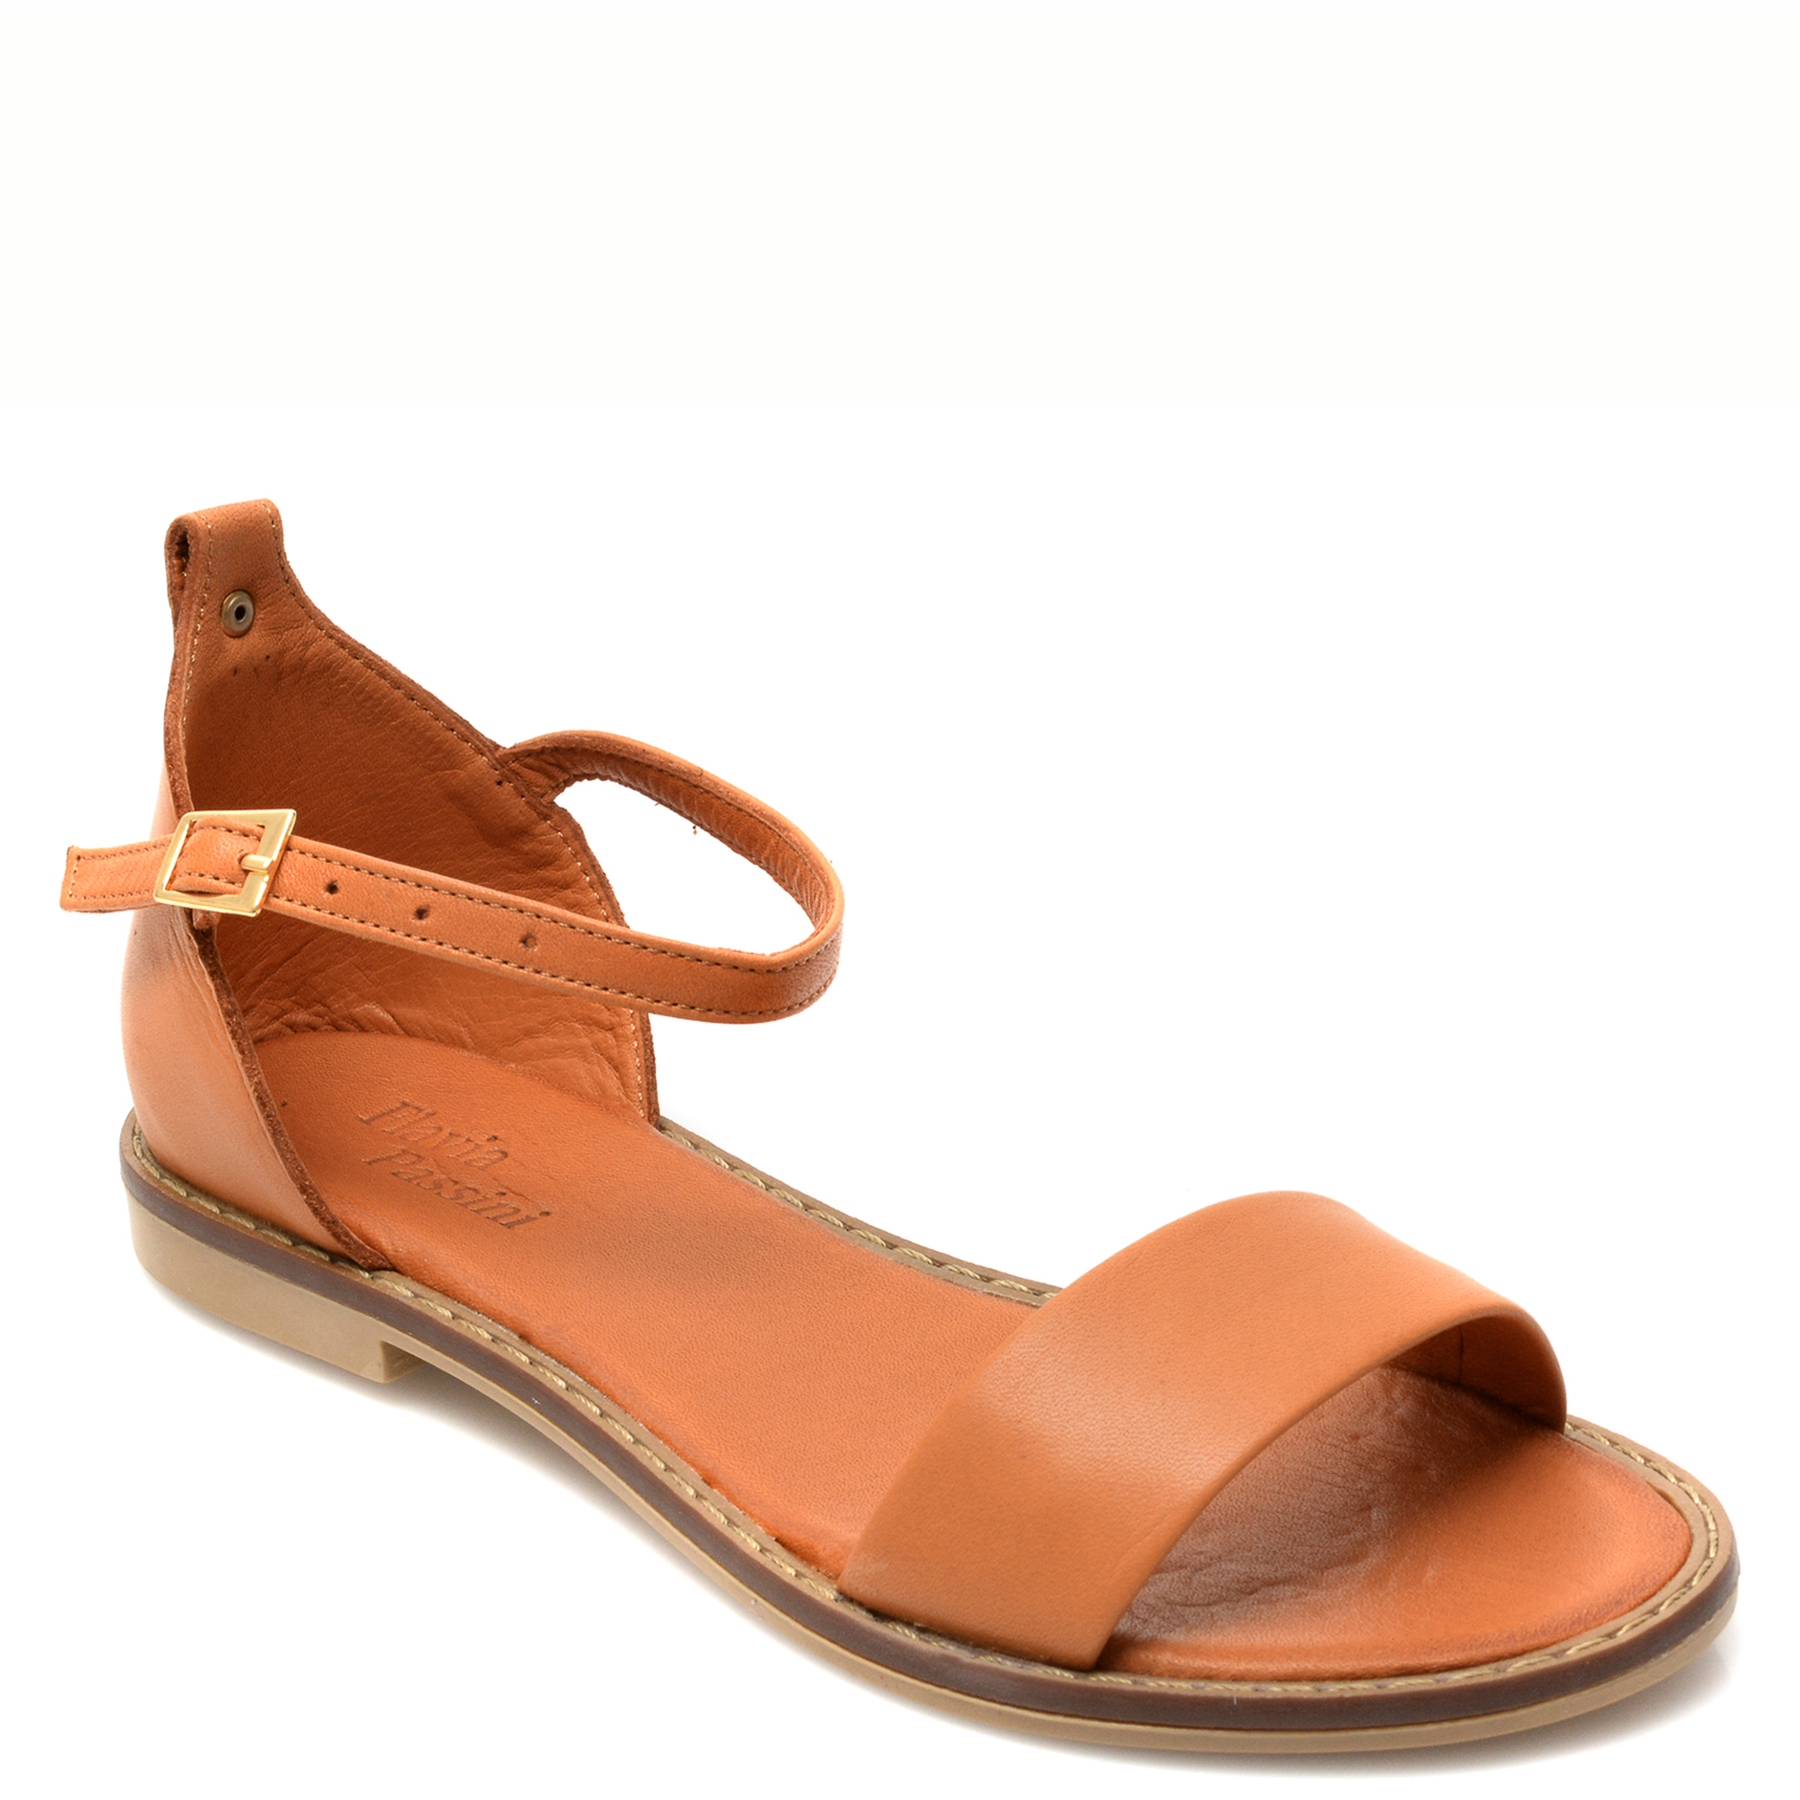 Sandale FLAVIA PASSINI maro, 666, din piele naturala imagine reduceri black friday 2021 /femei/sandale